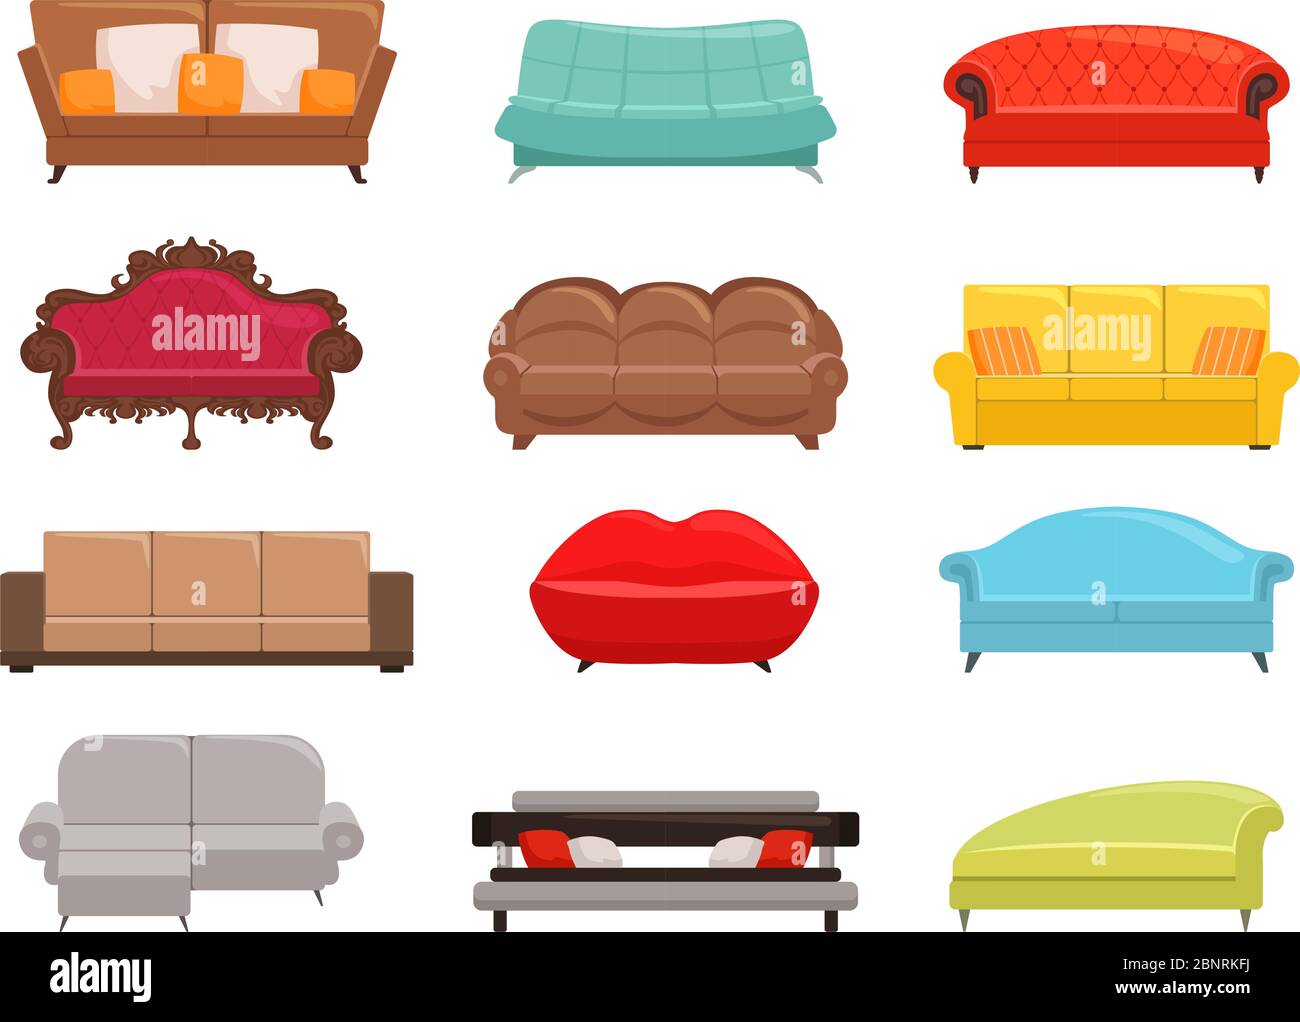 Sofakollektion. Komfortable Couch und Sofa-Bett-Set, Interieur Mode Sofas Möbel, Haus moderne Canaps Vektor-farbige Illustration Stock Vektor